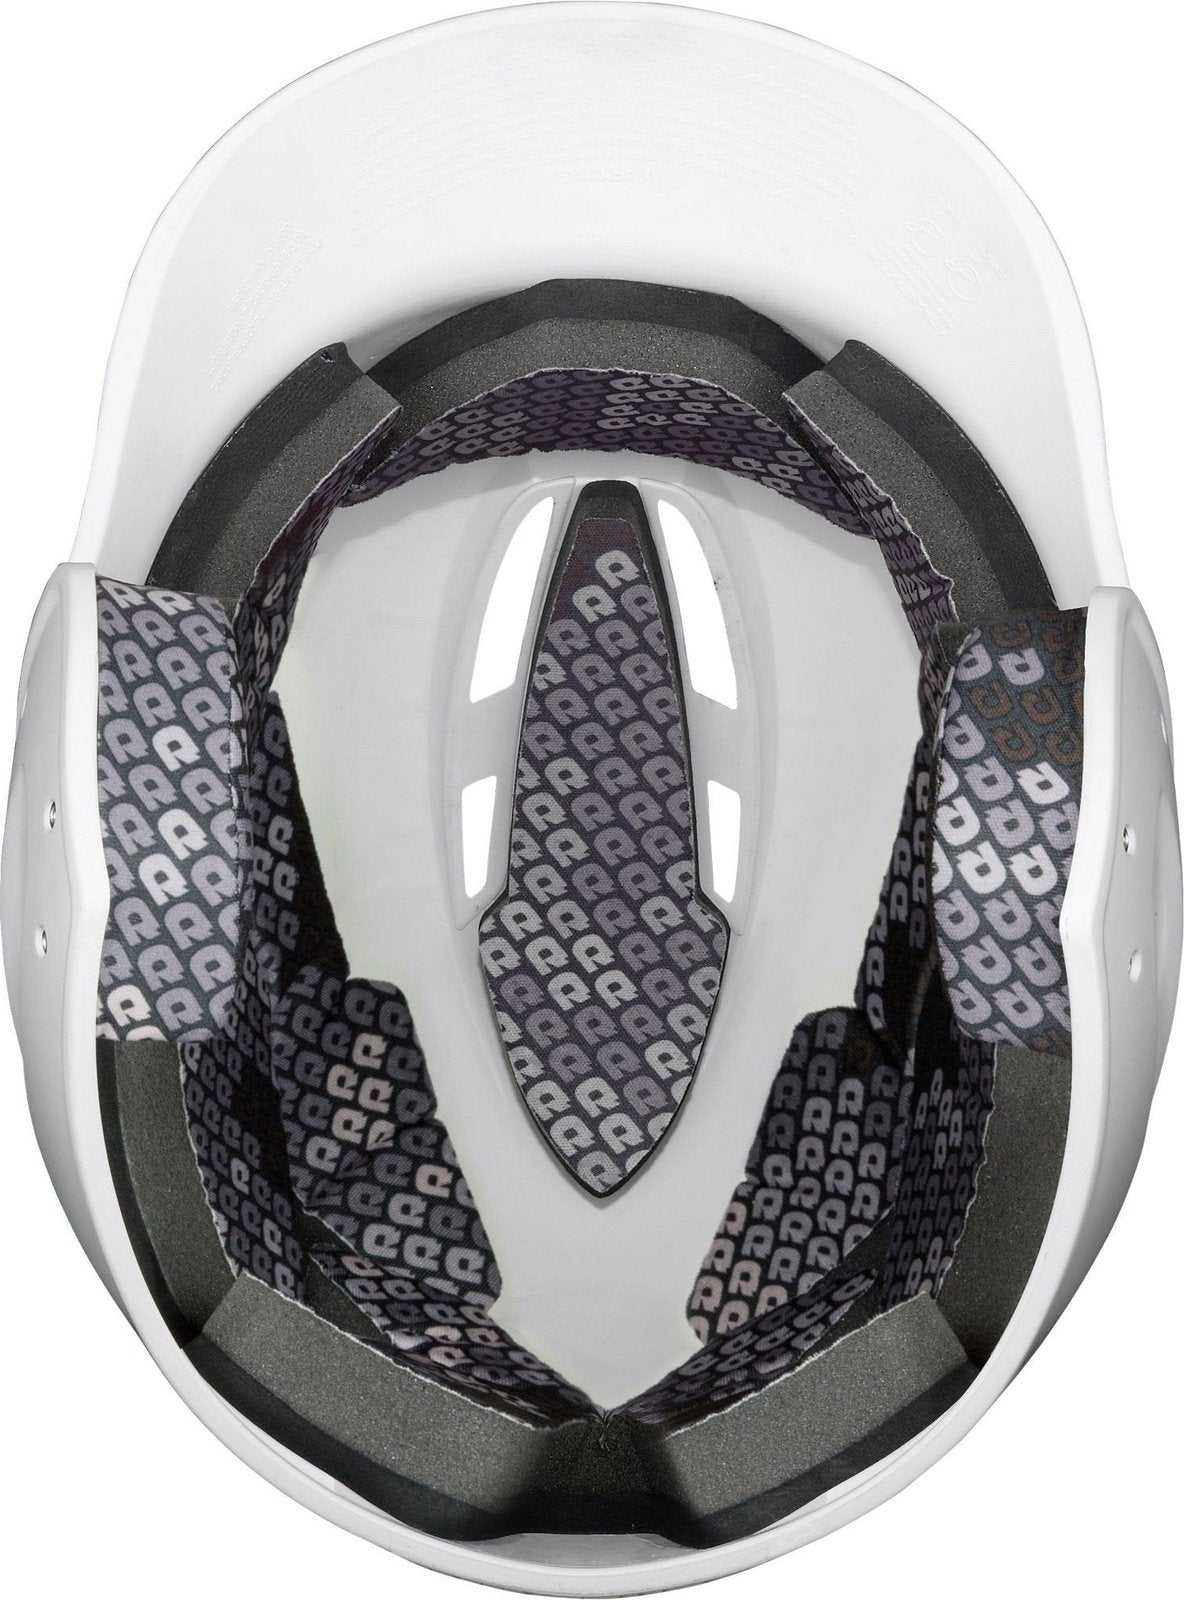 DeMarini Paradox Matte Batting Helmet - White